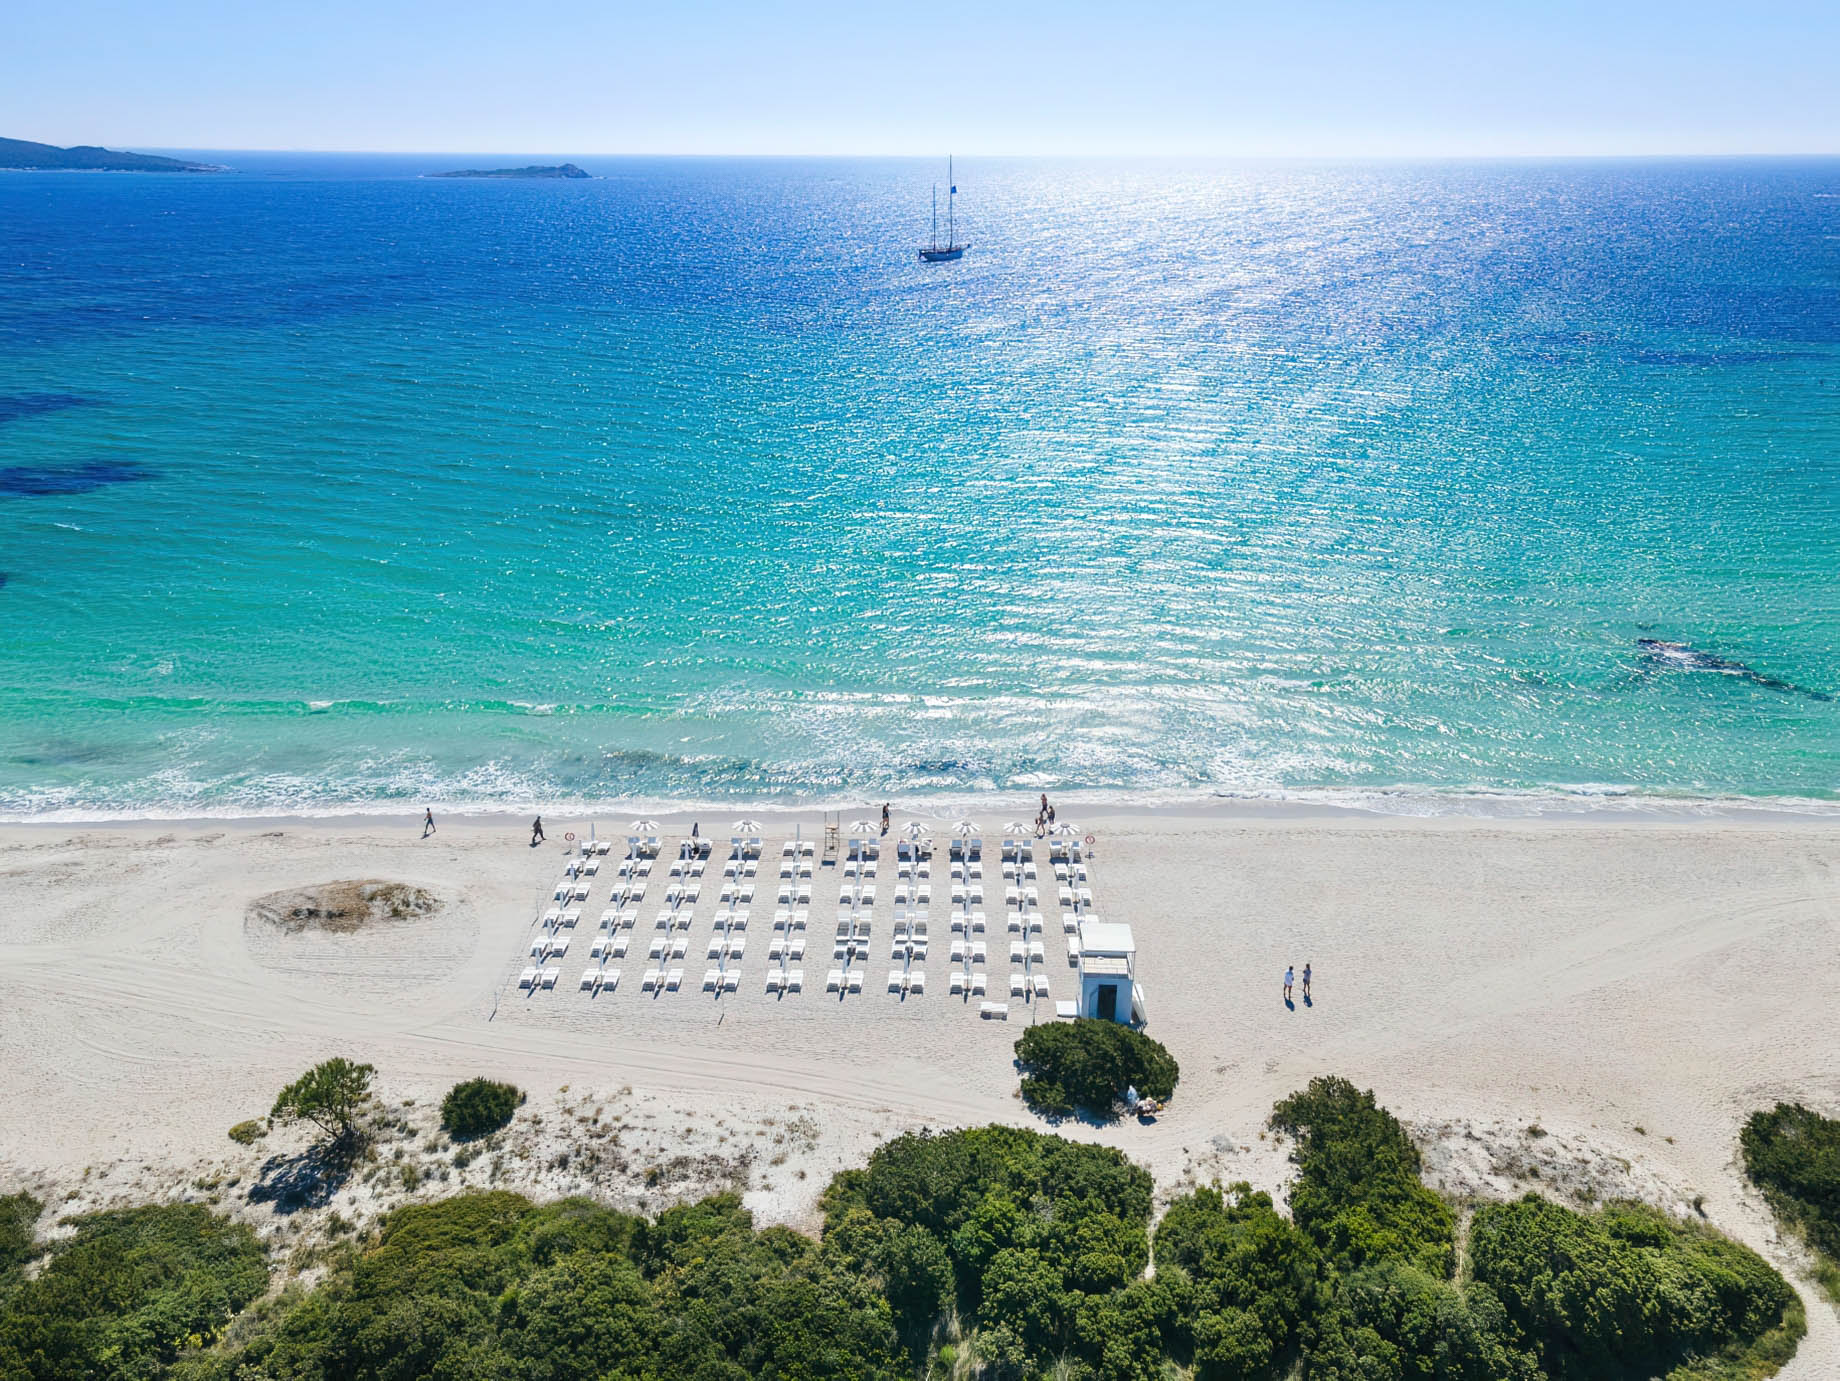 Baglioni Resort Sardinia – San Teodoro, Sardegna, Italy – Aerial Beach View